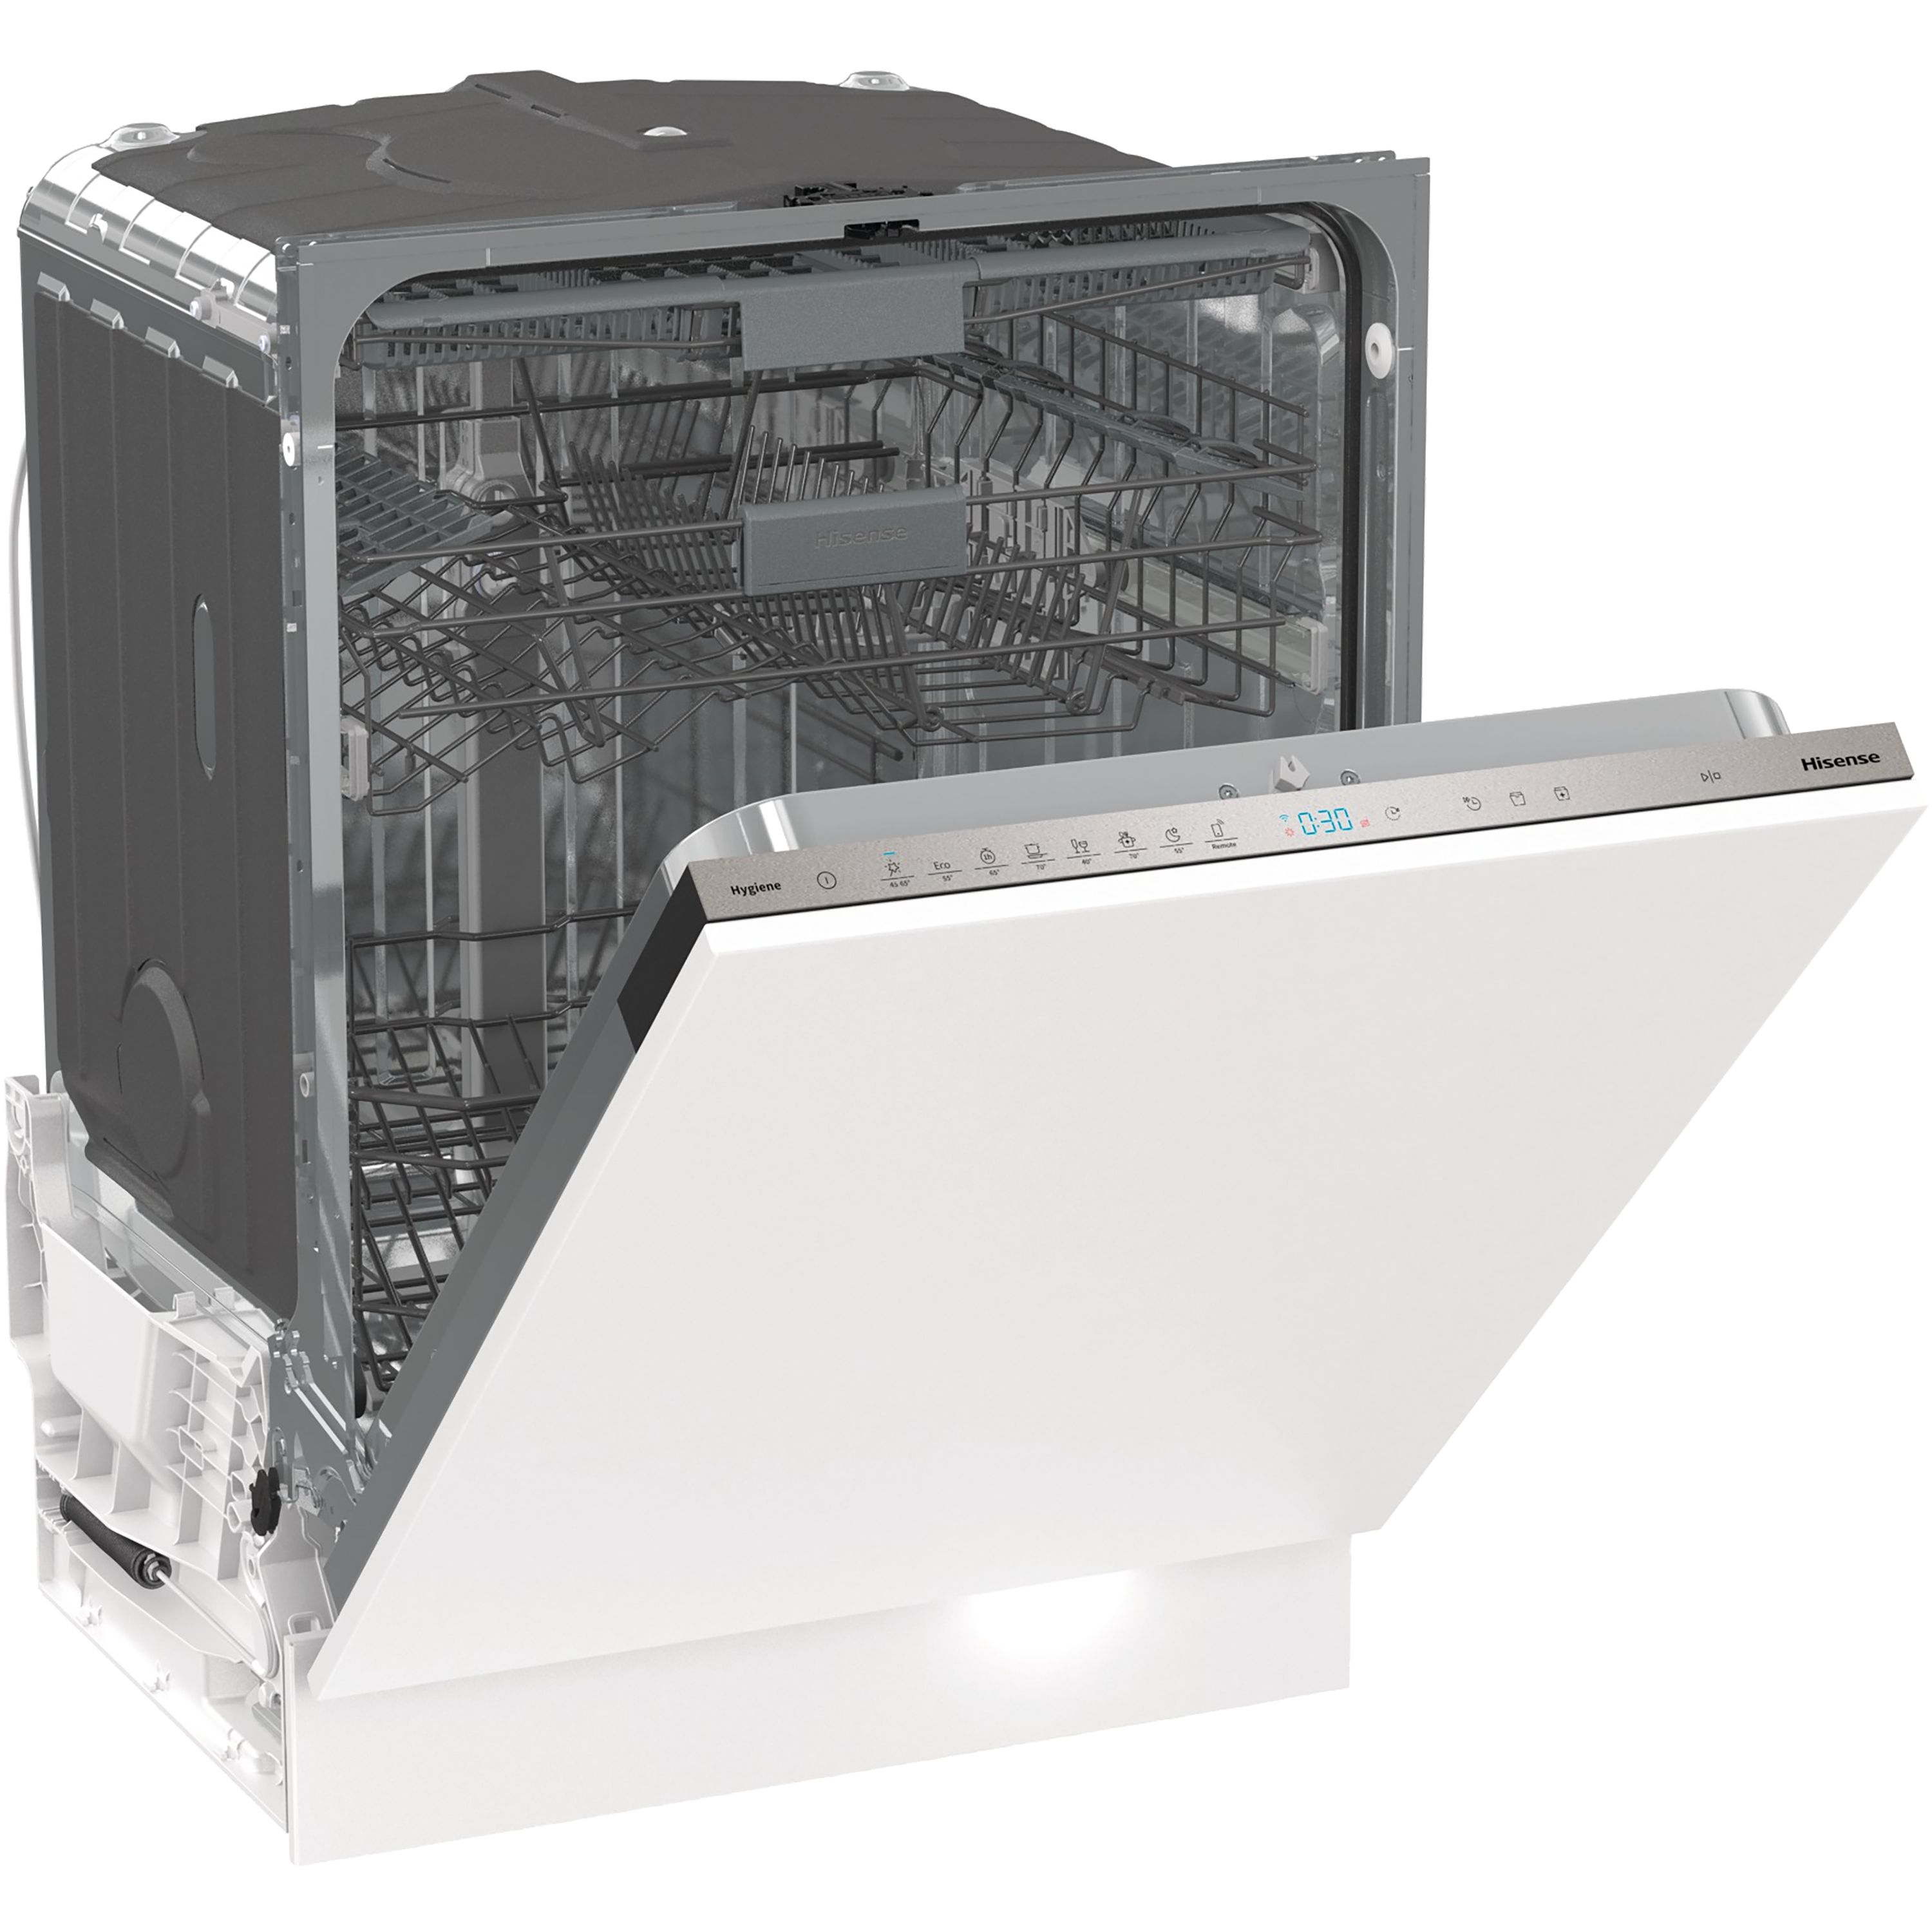 Hisense HV673C60UK_BK Integrated Full size Dishwasher - Stainless steel effect